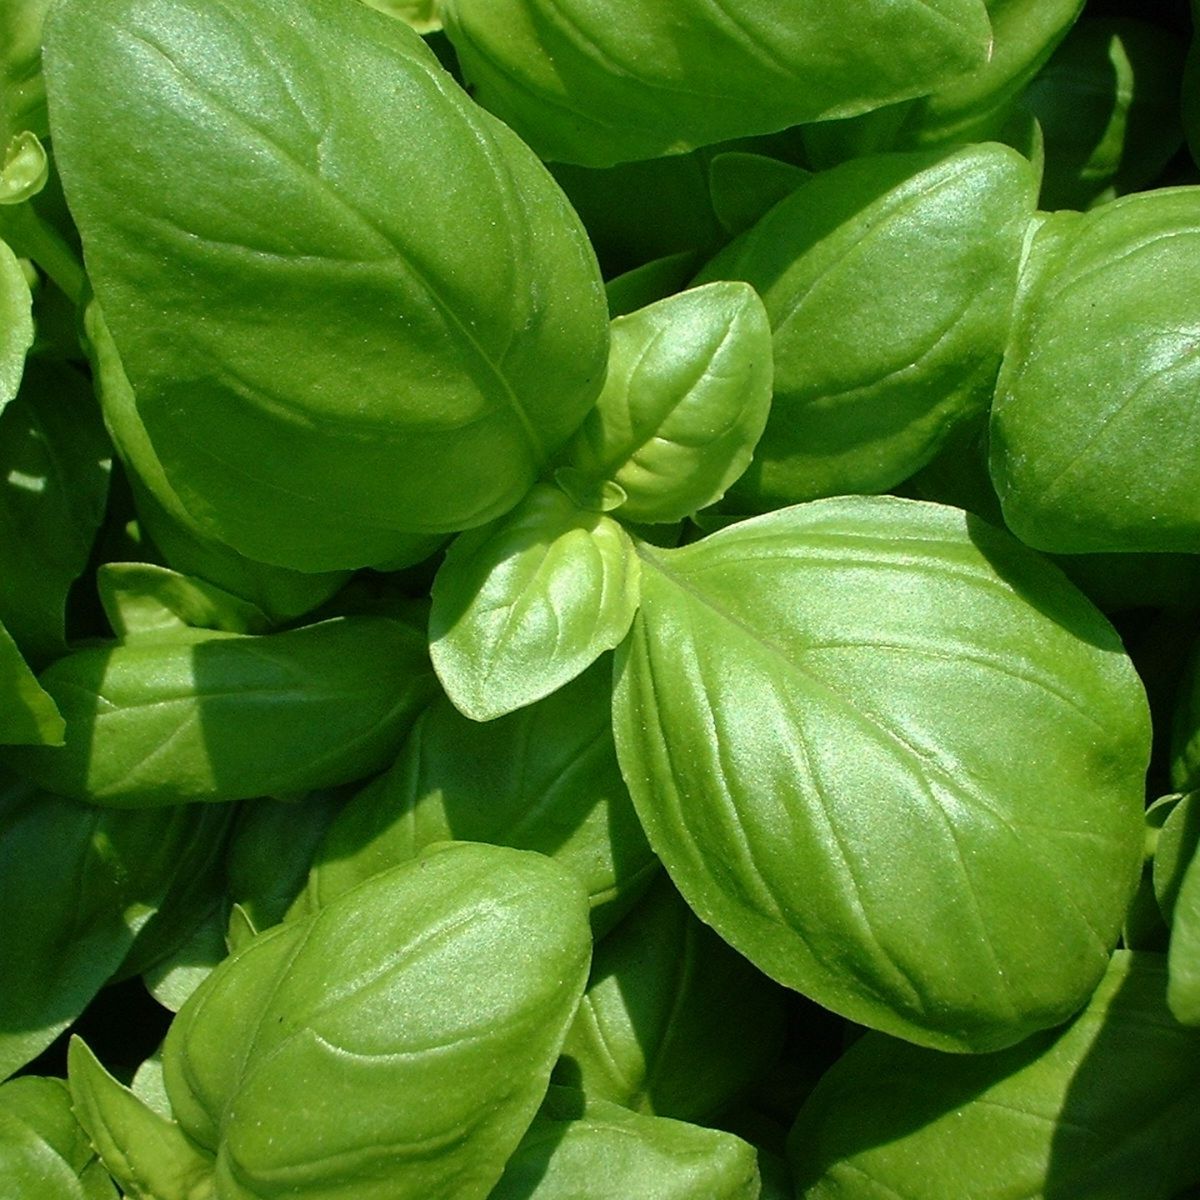 Seminte plante aromatice - Seminte Plante aromatice BUSUIOC VERDE Horti Tops 1 g, hectarul.ro